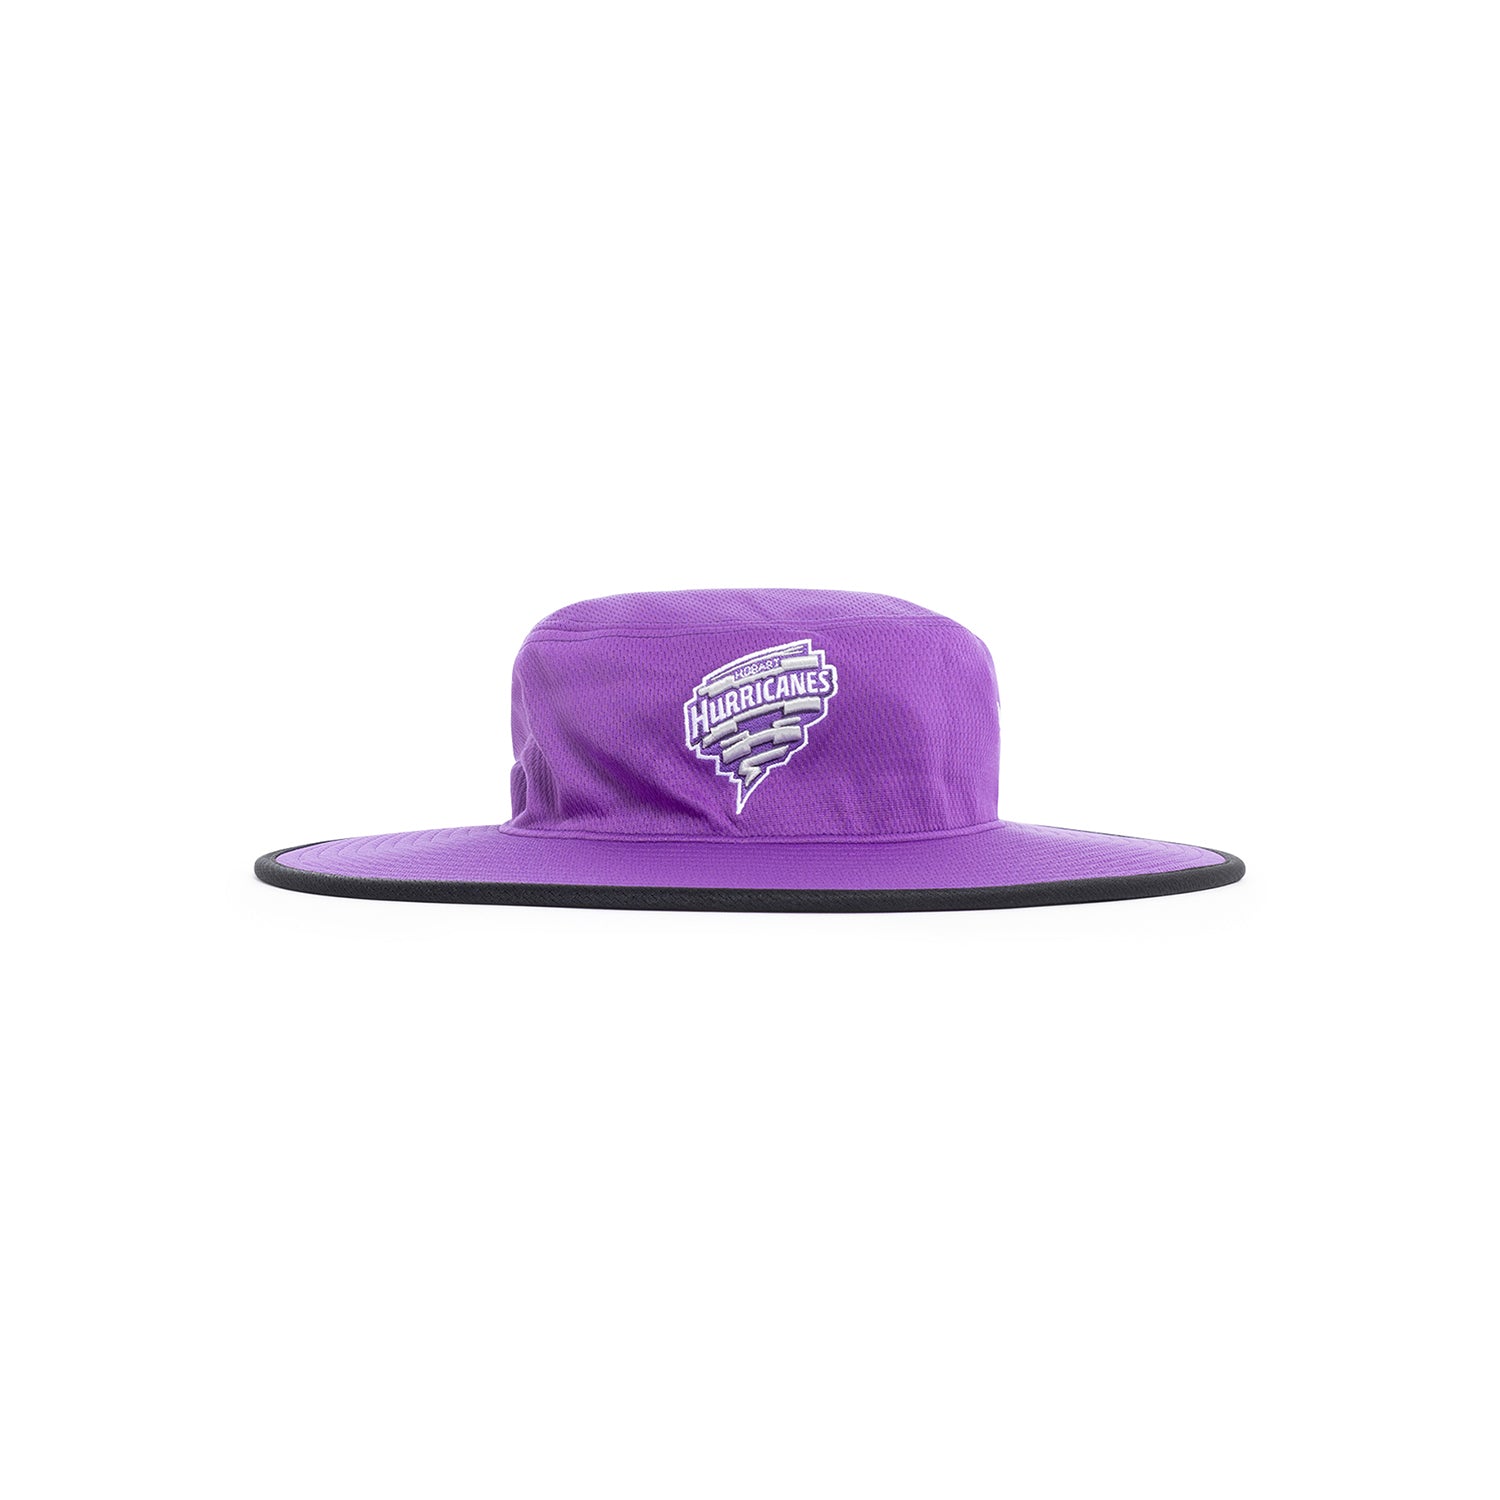 Wide Brim Hats Official Team Merchandise – The Official Cricket Shop